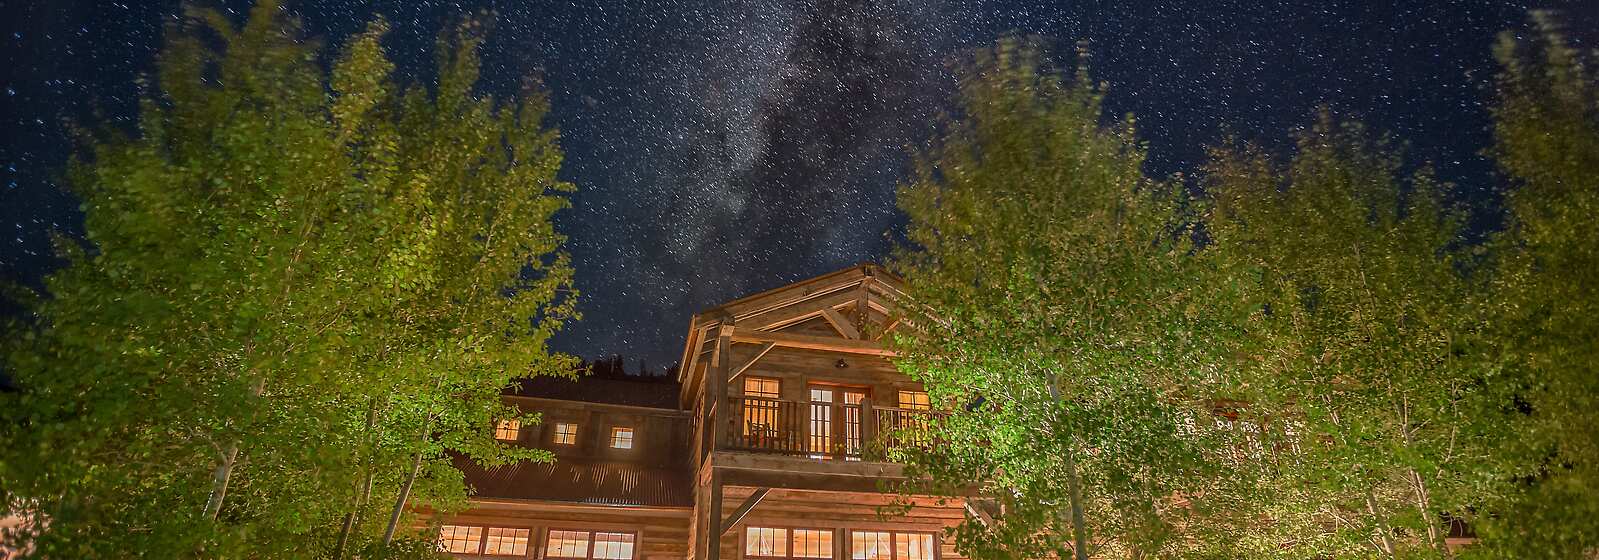 The Granite Lodge under the Montana night sky